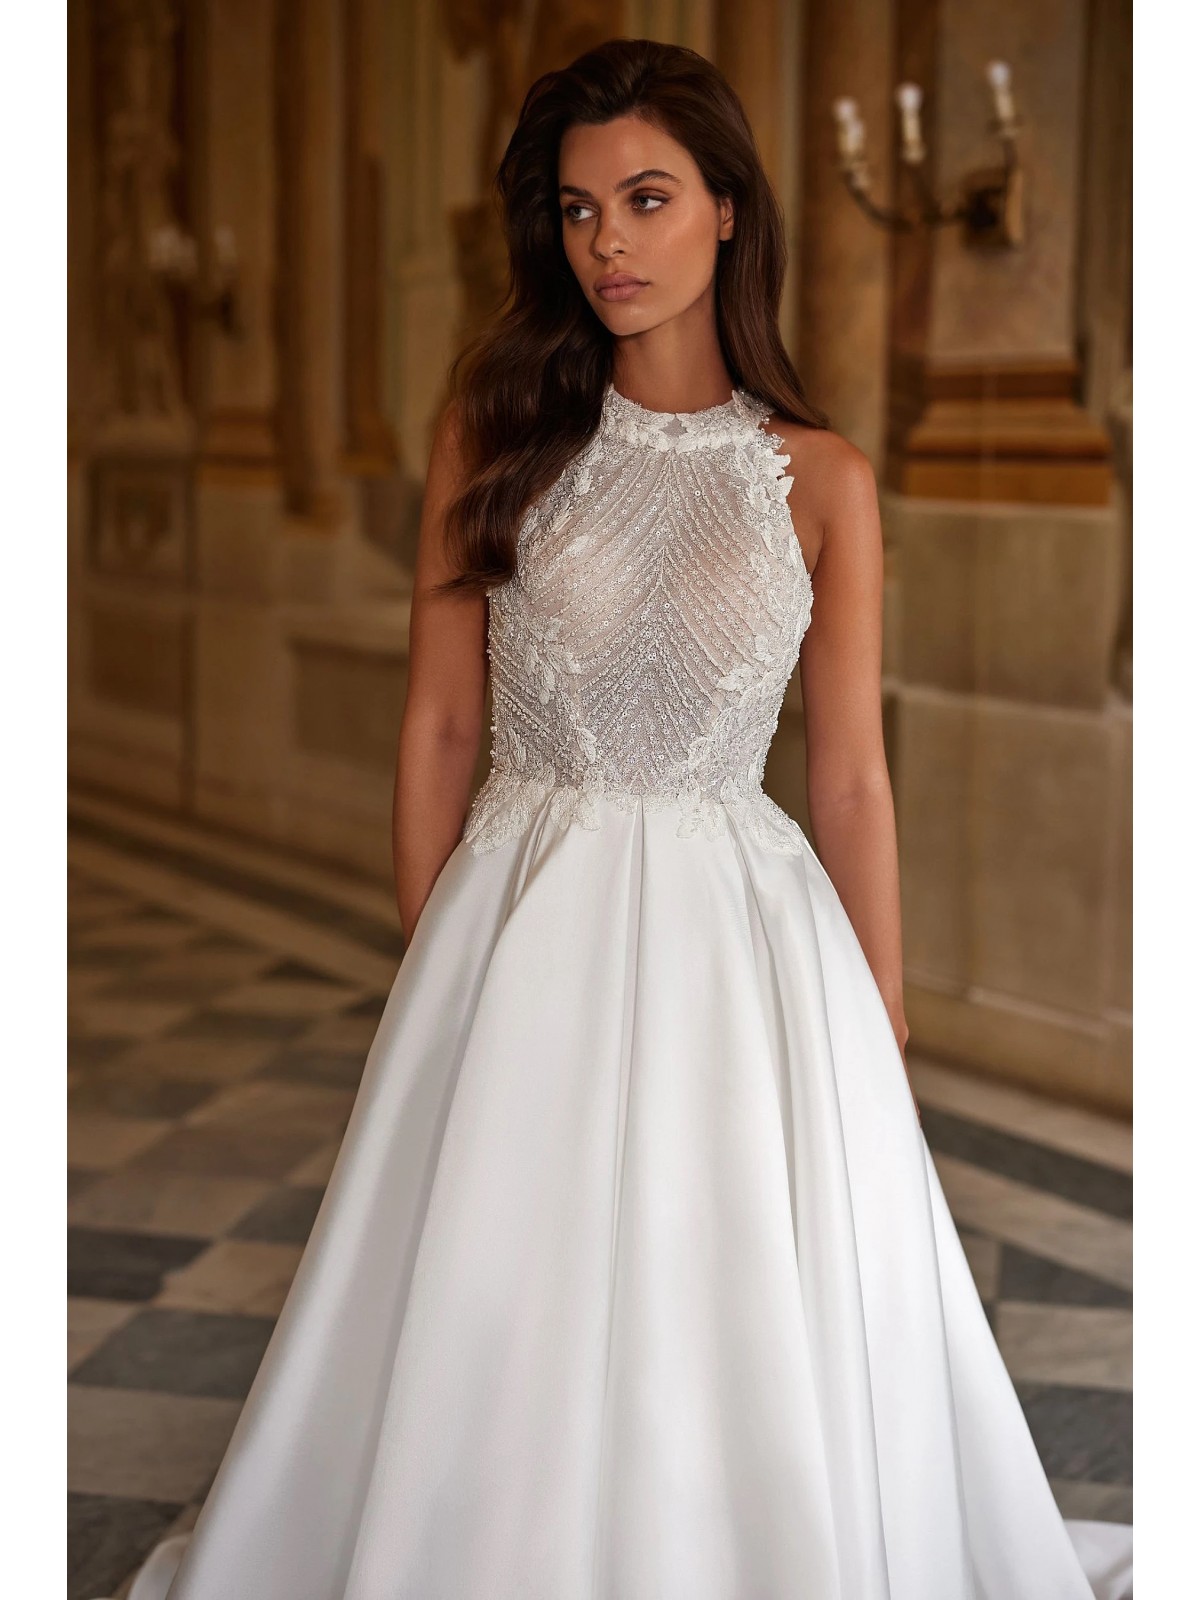 Luxury Wedding Dress - Embroidered Symmetrical Lace A-line Dress with Mikado fabric - Prazera - LIDA-01366.00.17